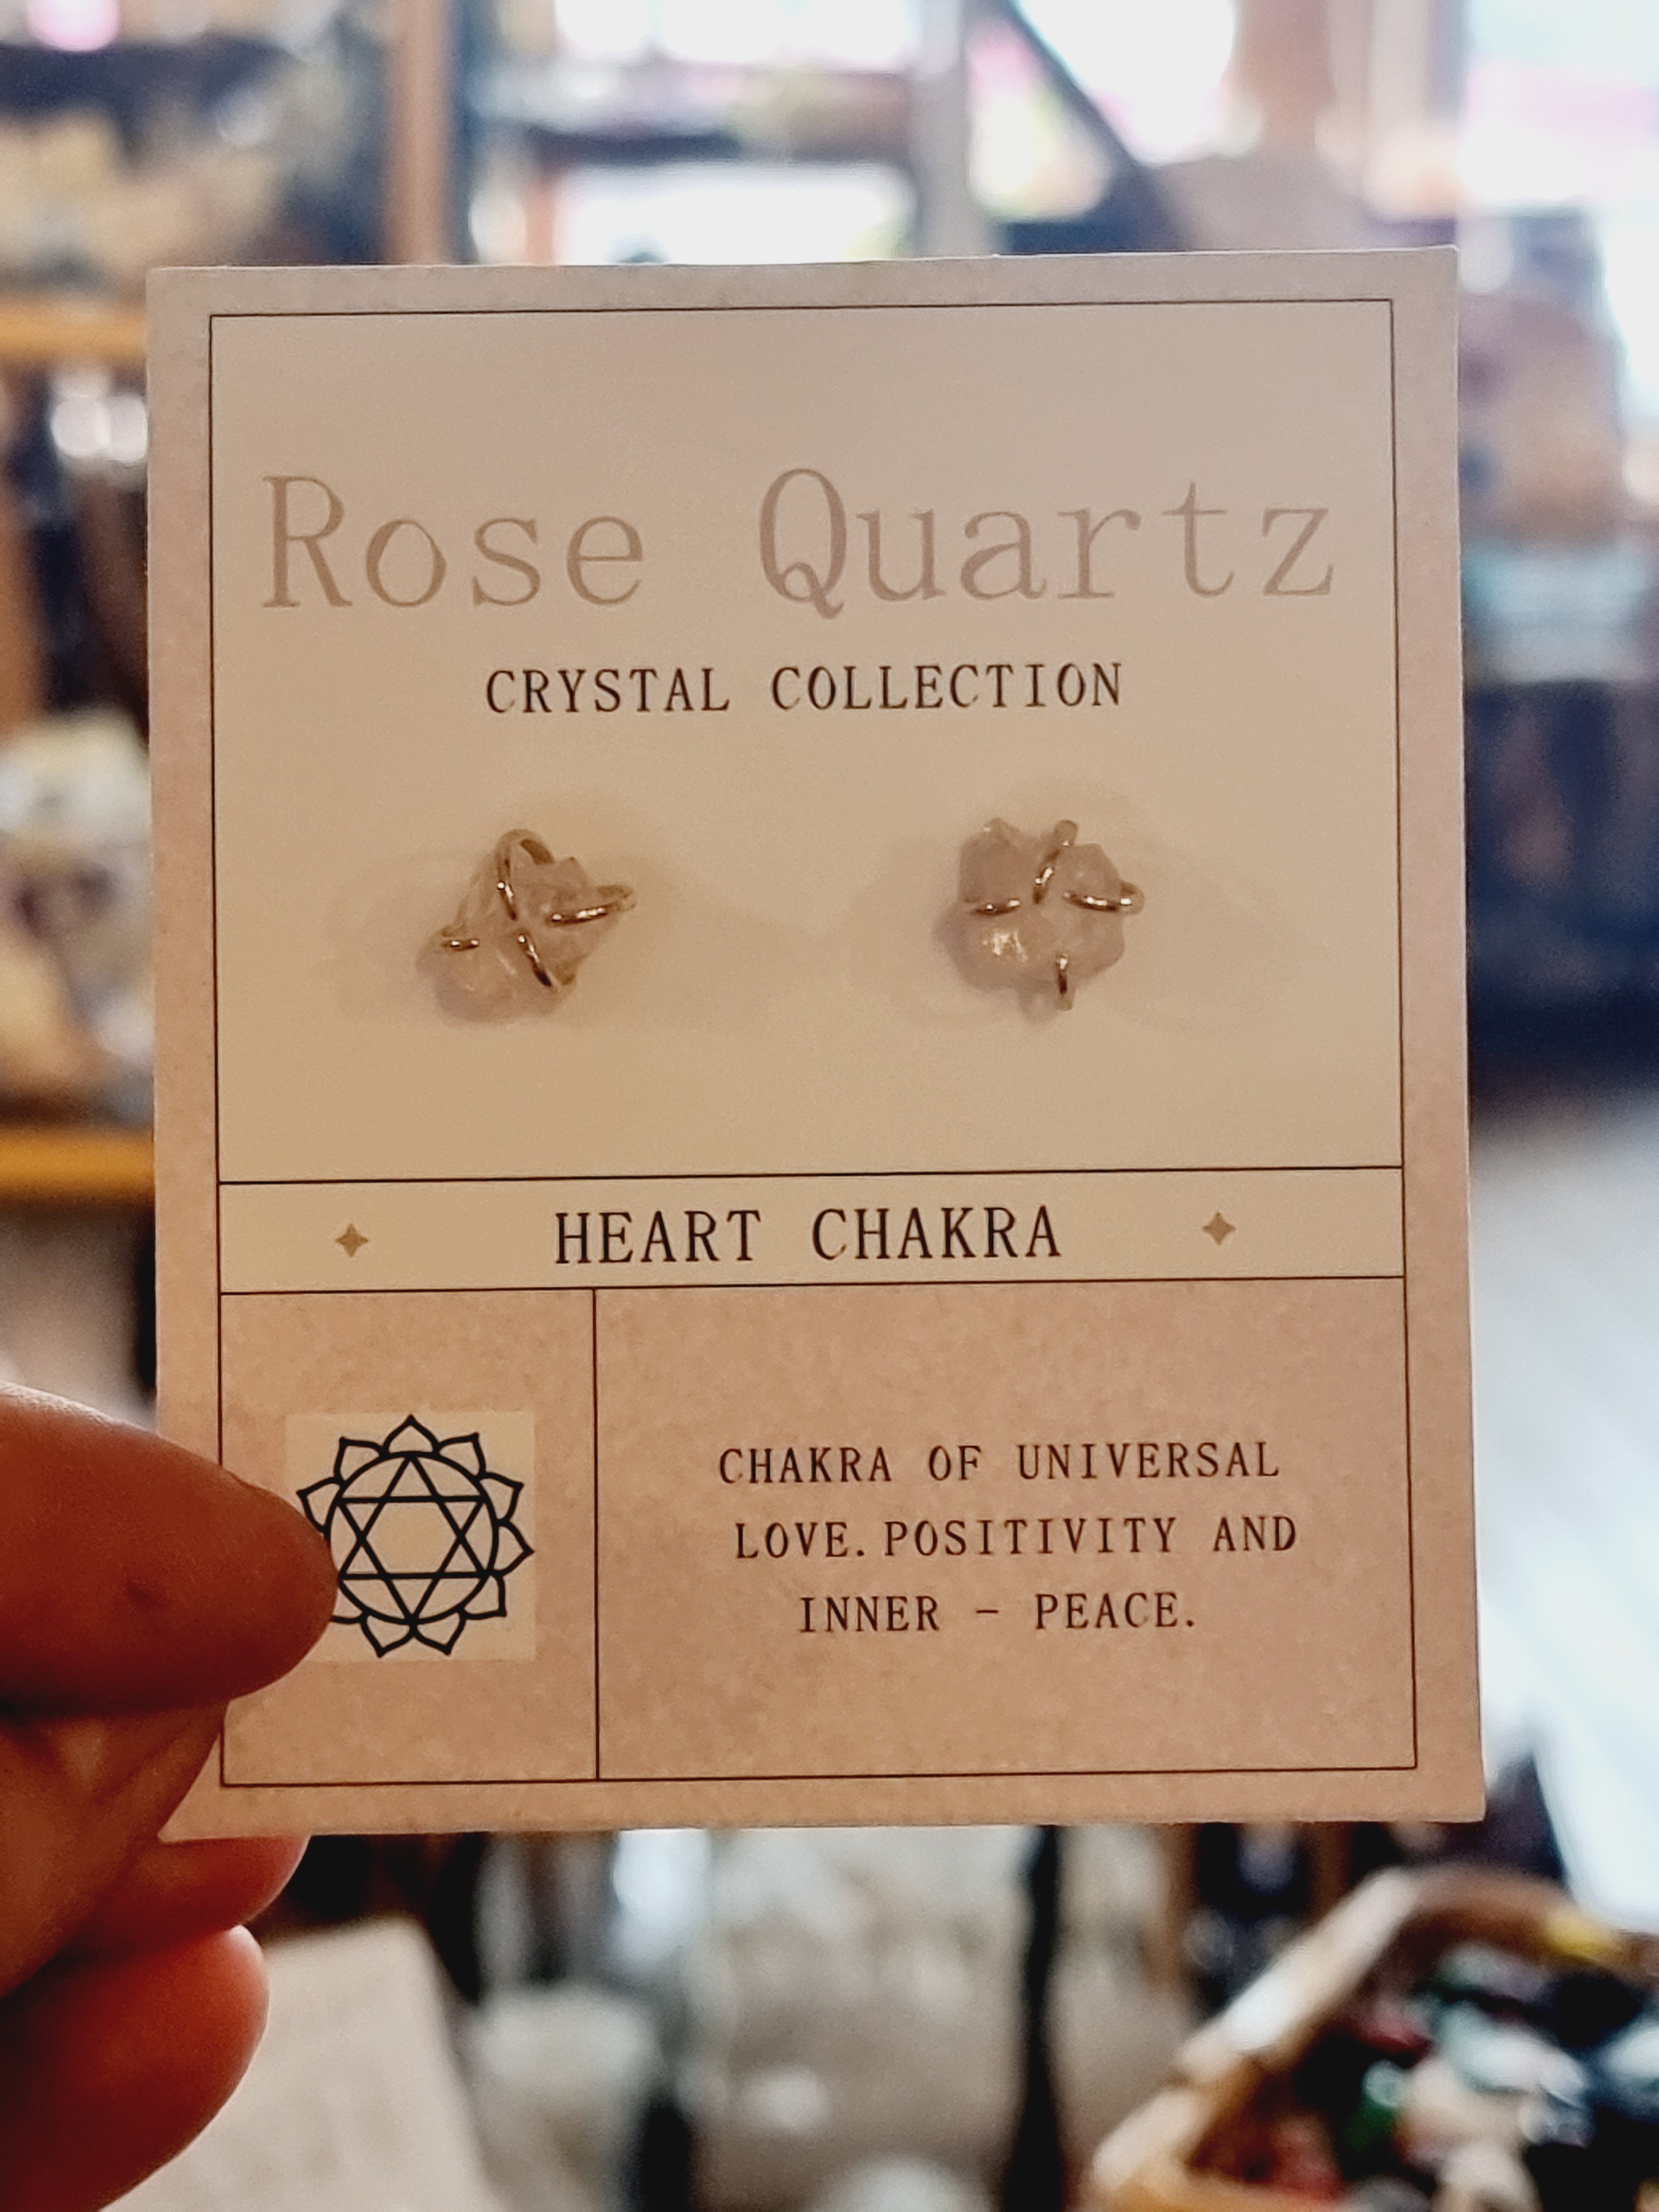 Rose Quartz Heart Chakra Earrings